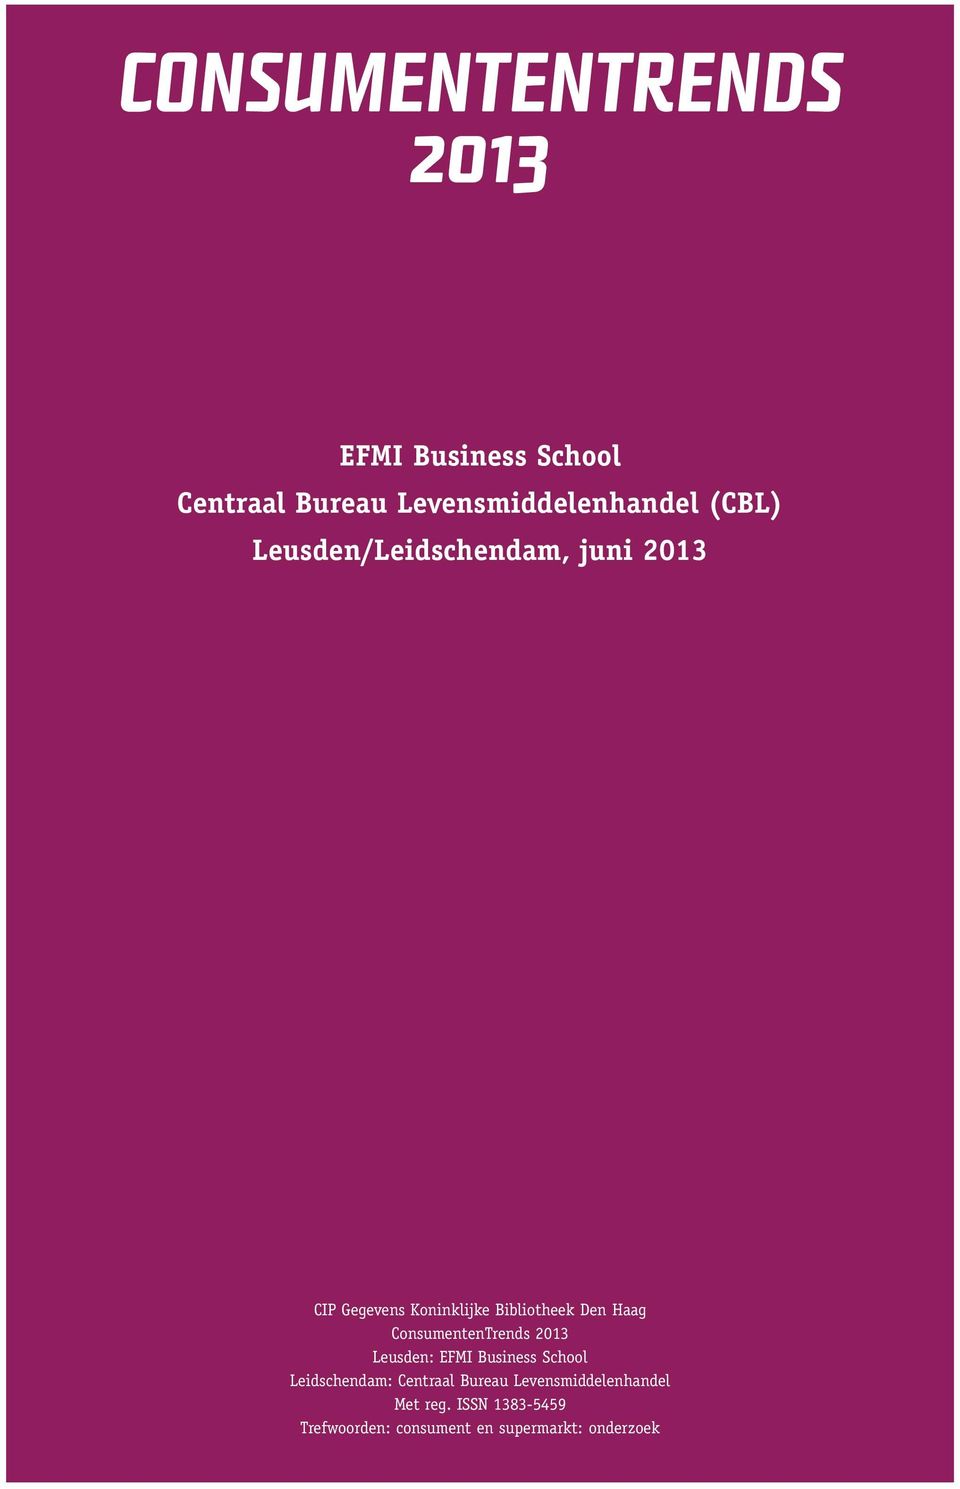 ConsumentenTrends 2013 Leusden: EFMI Business School Leidschendam: Centraal Bureau